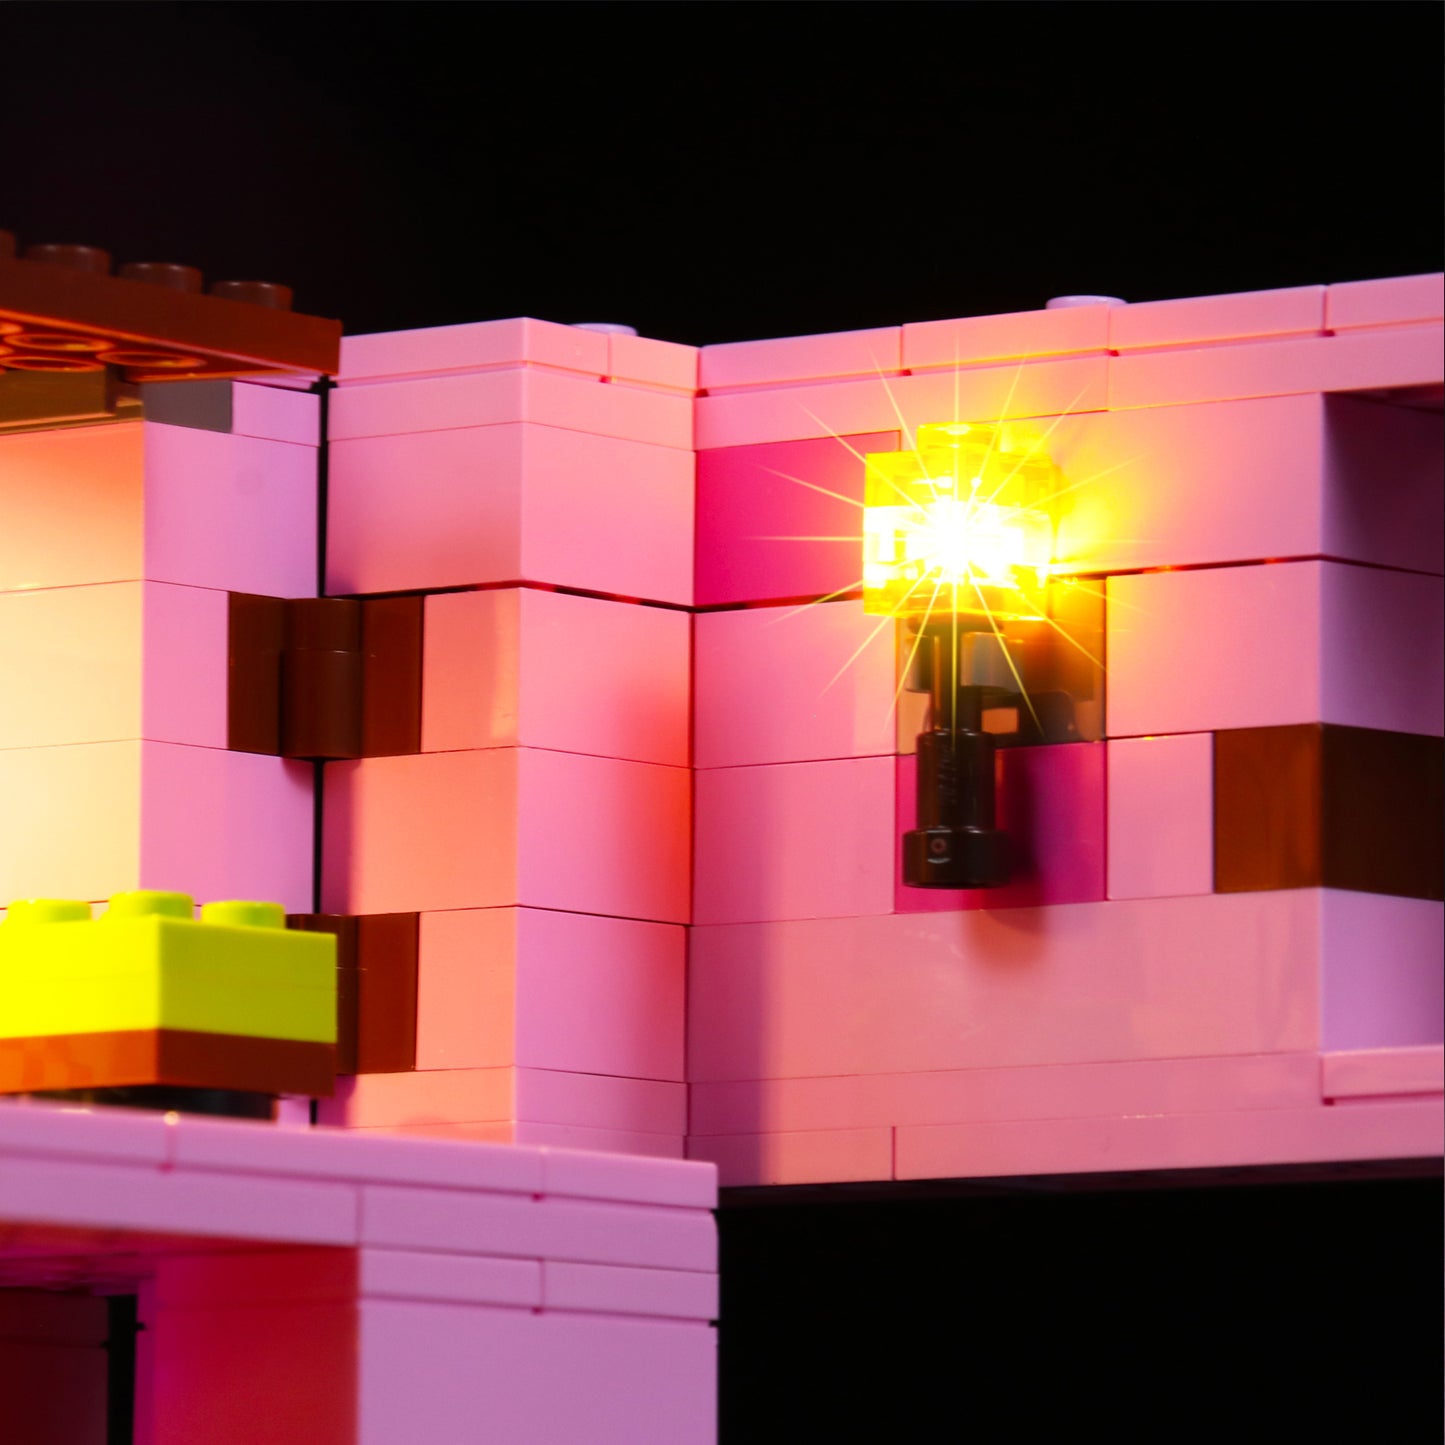 Light kit for Lego Ideas 21170 Minecraft The Pig House